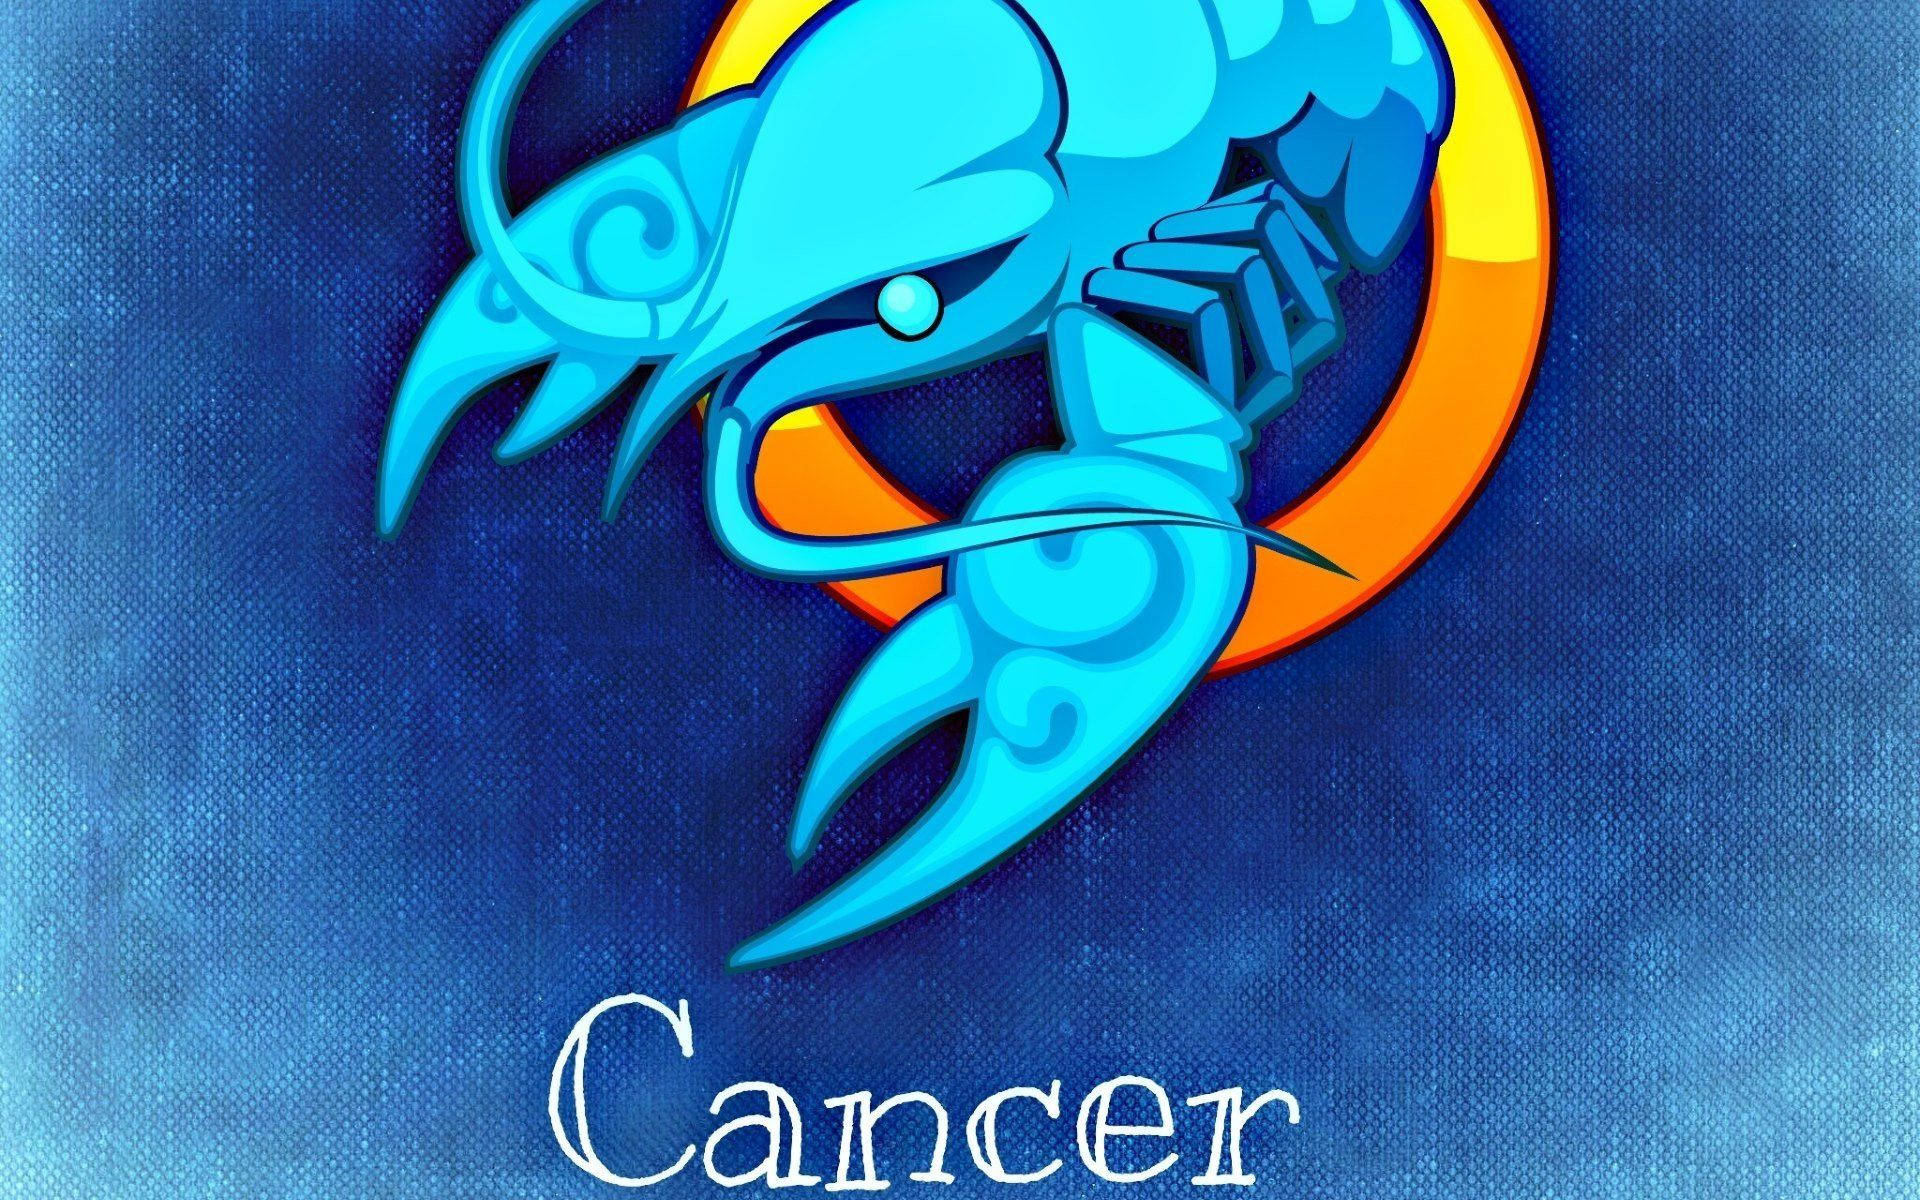 Zodiac Cancer Sign With Blue Crayfish Symbol